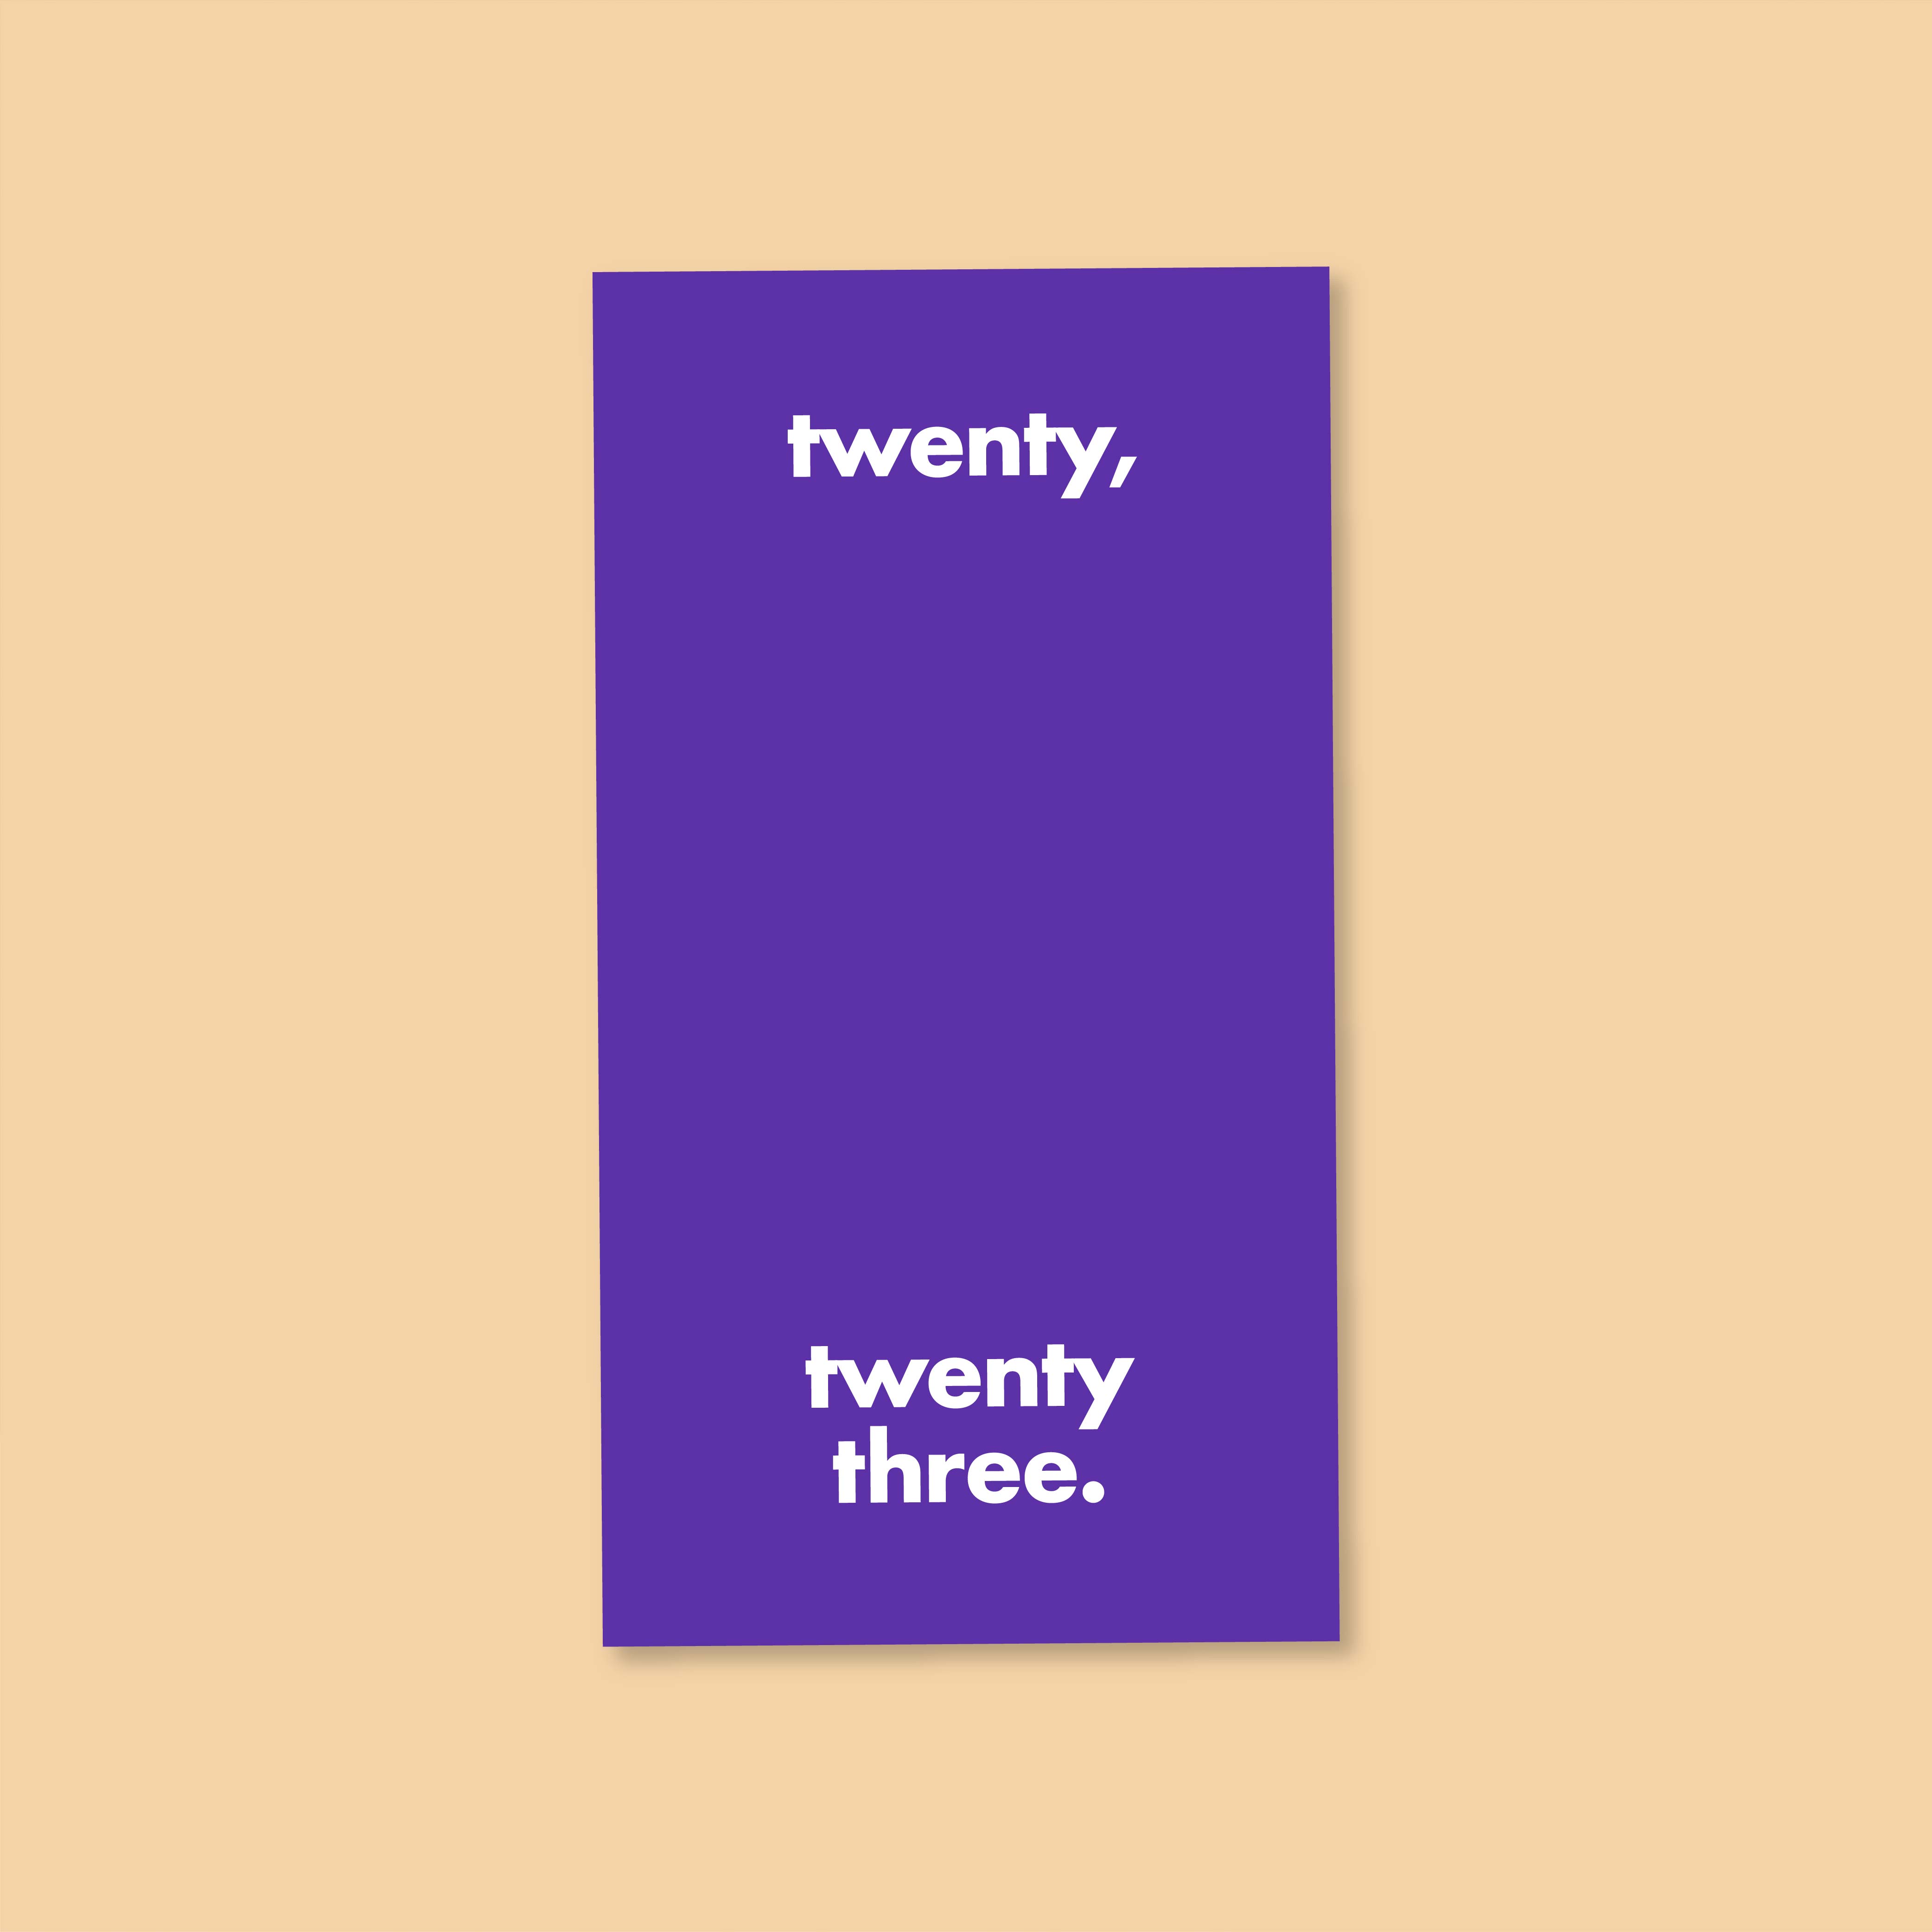 [Diary] twenty,twenty three._2023_mini_Eggplant